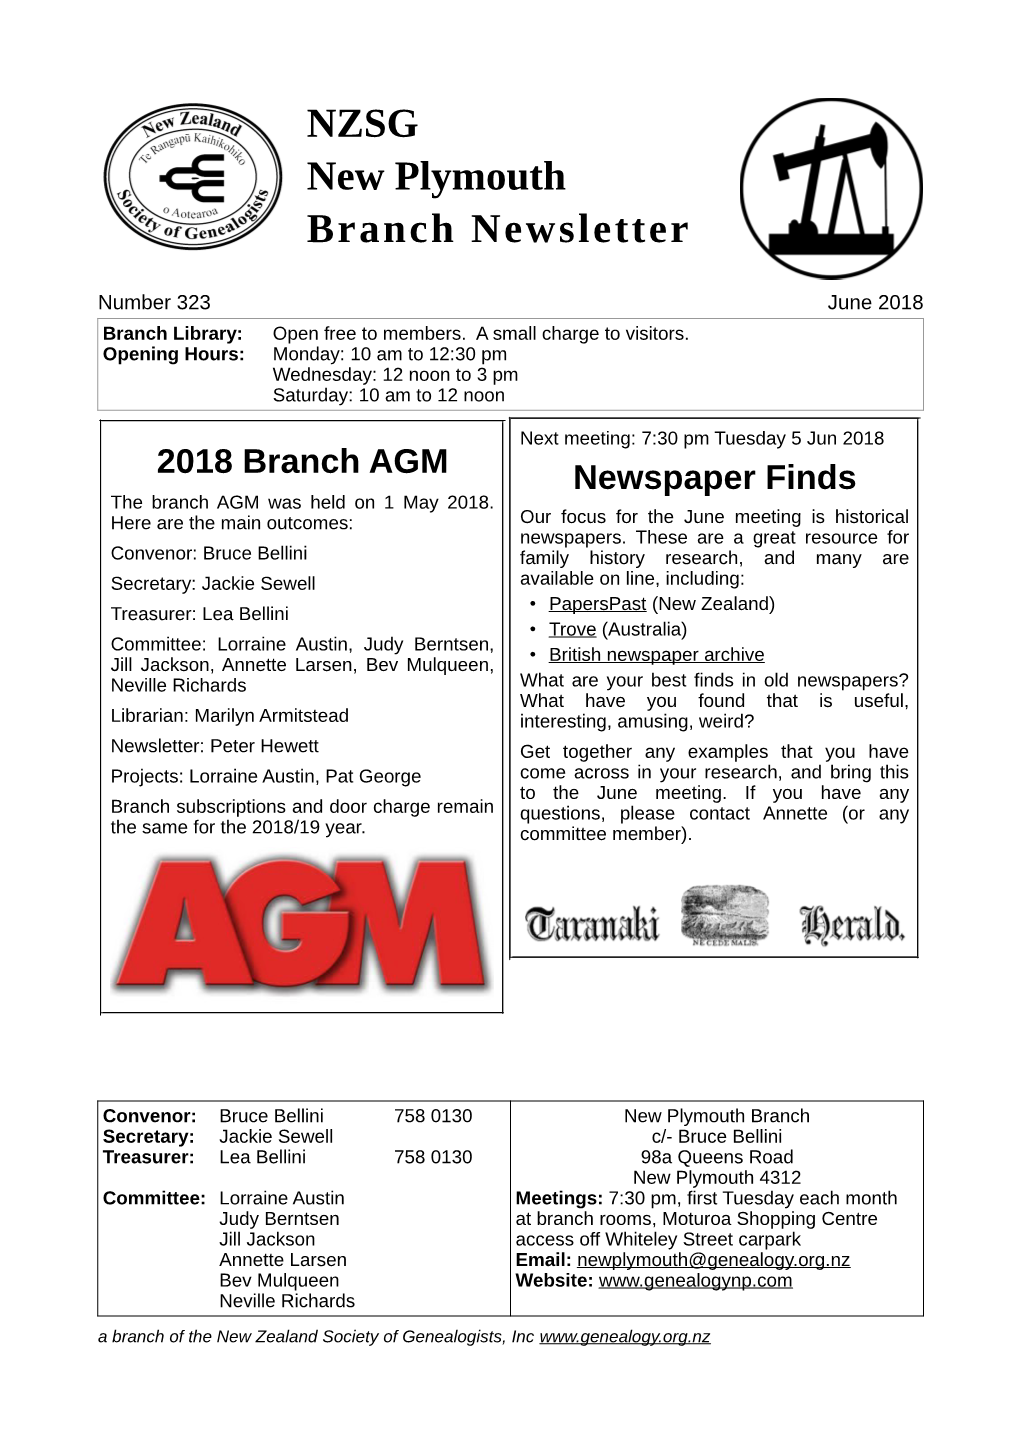 NZSG New Plymouth Branch Newsletter